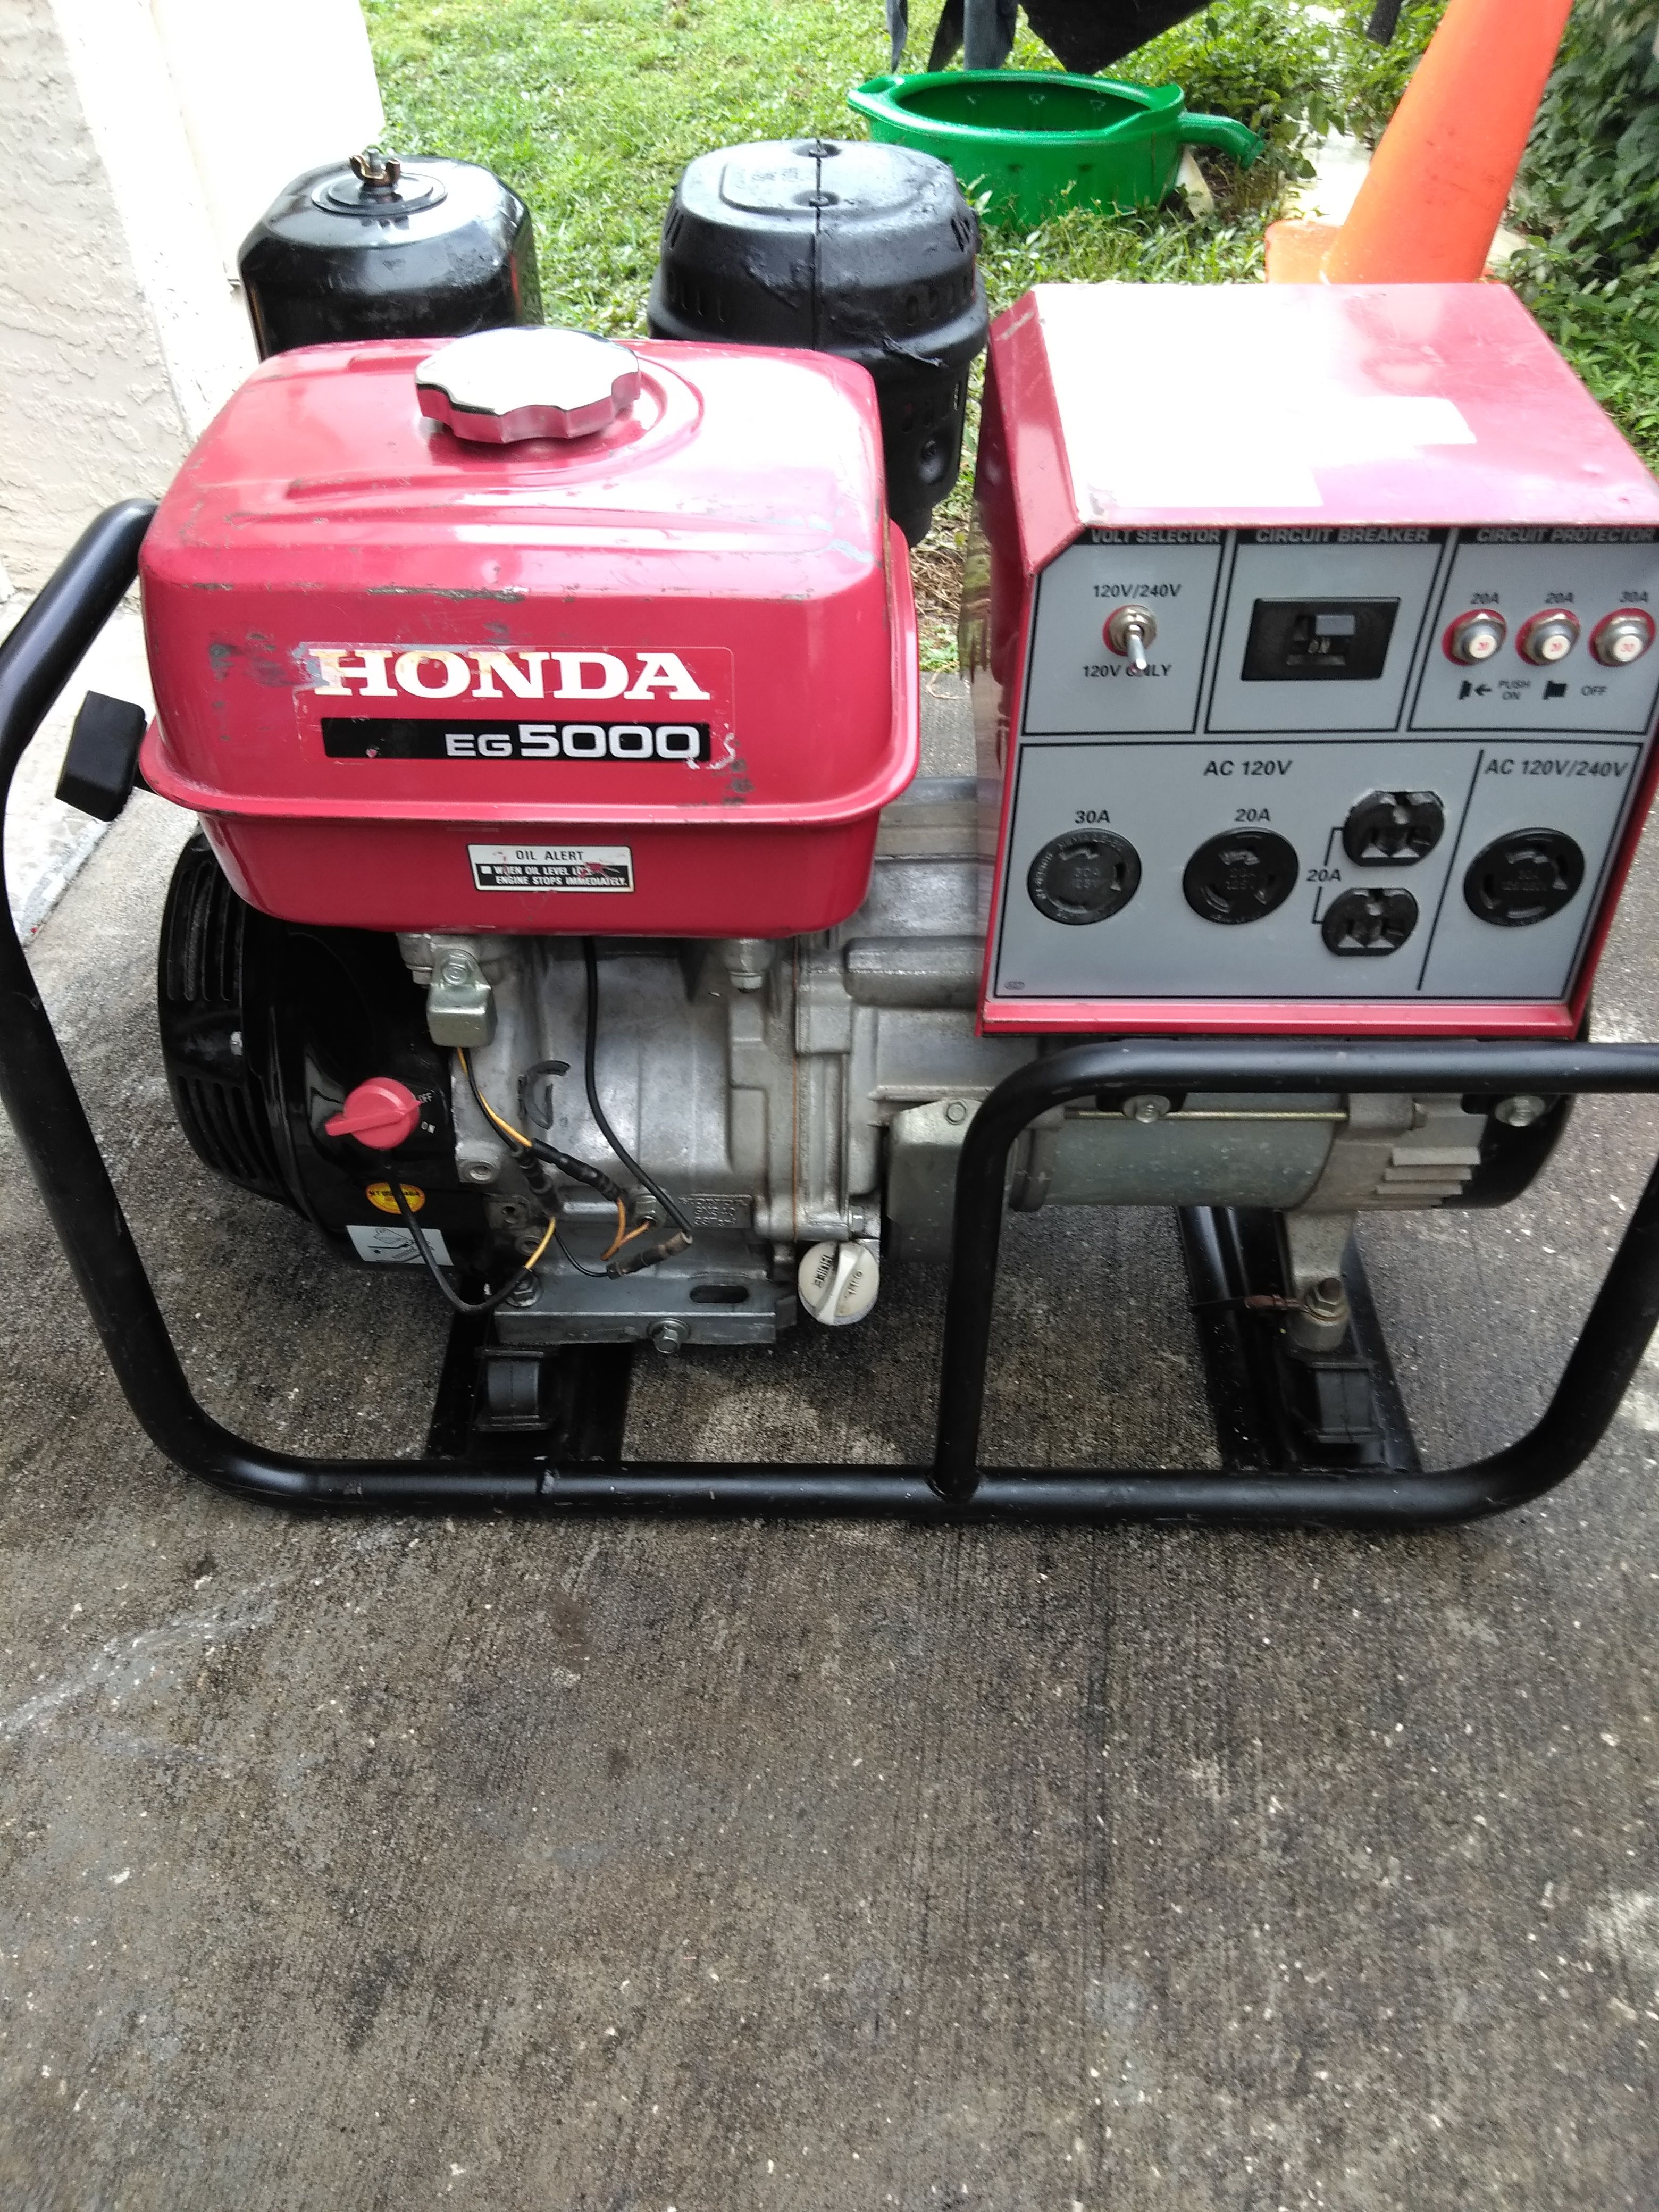 Honda eg5000 generator